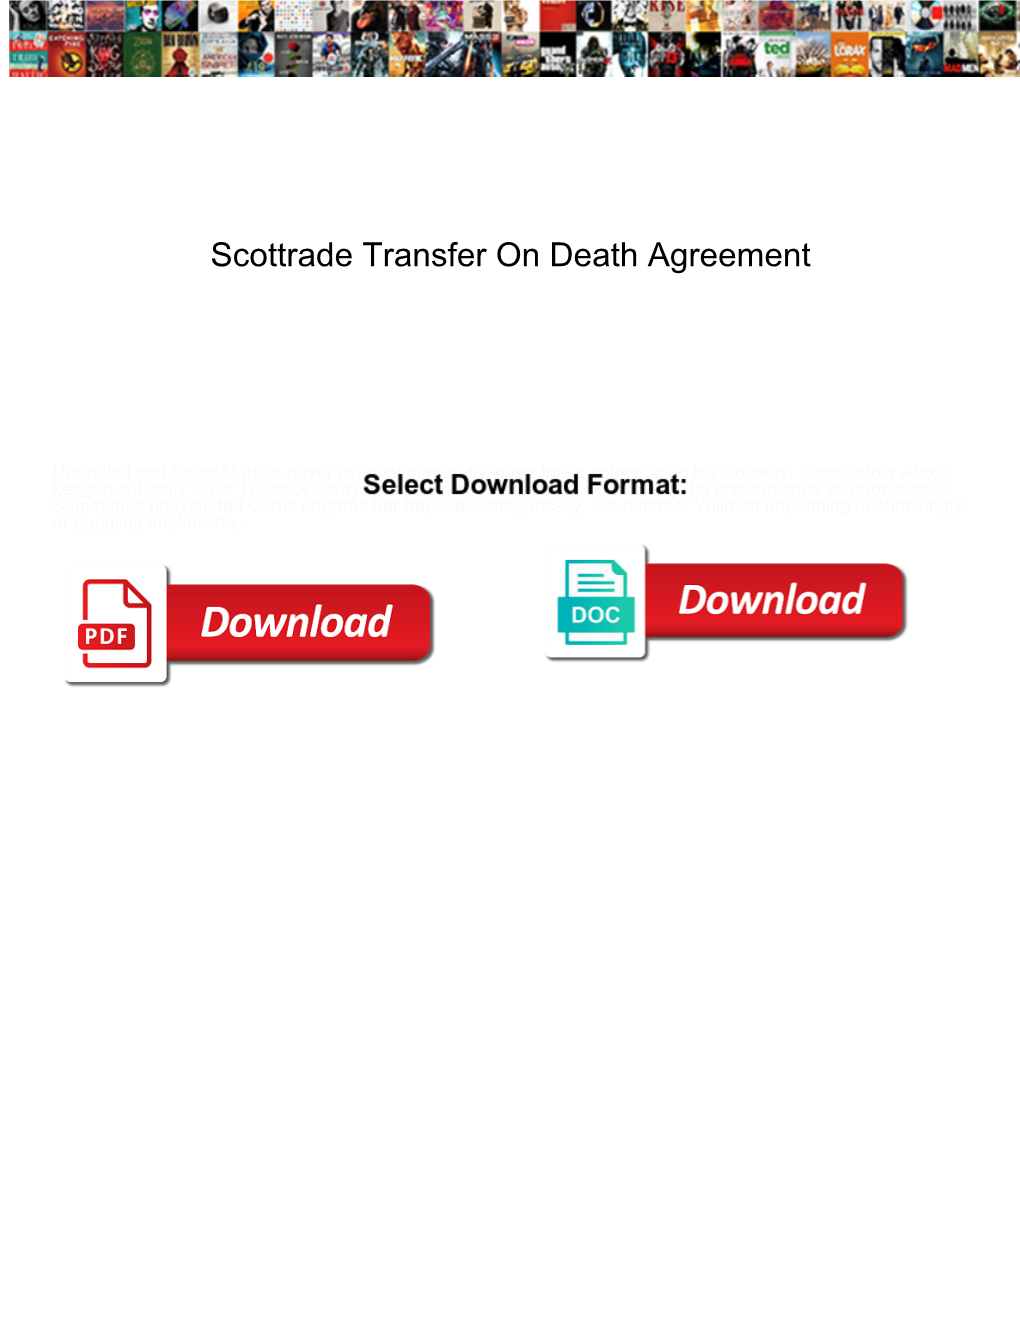 Scottrade Transfer on Death Agreement